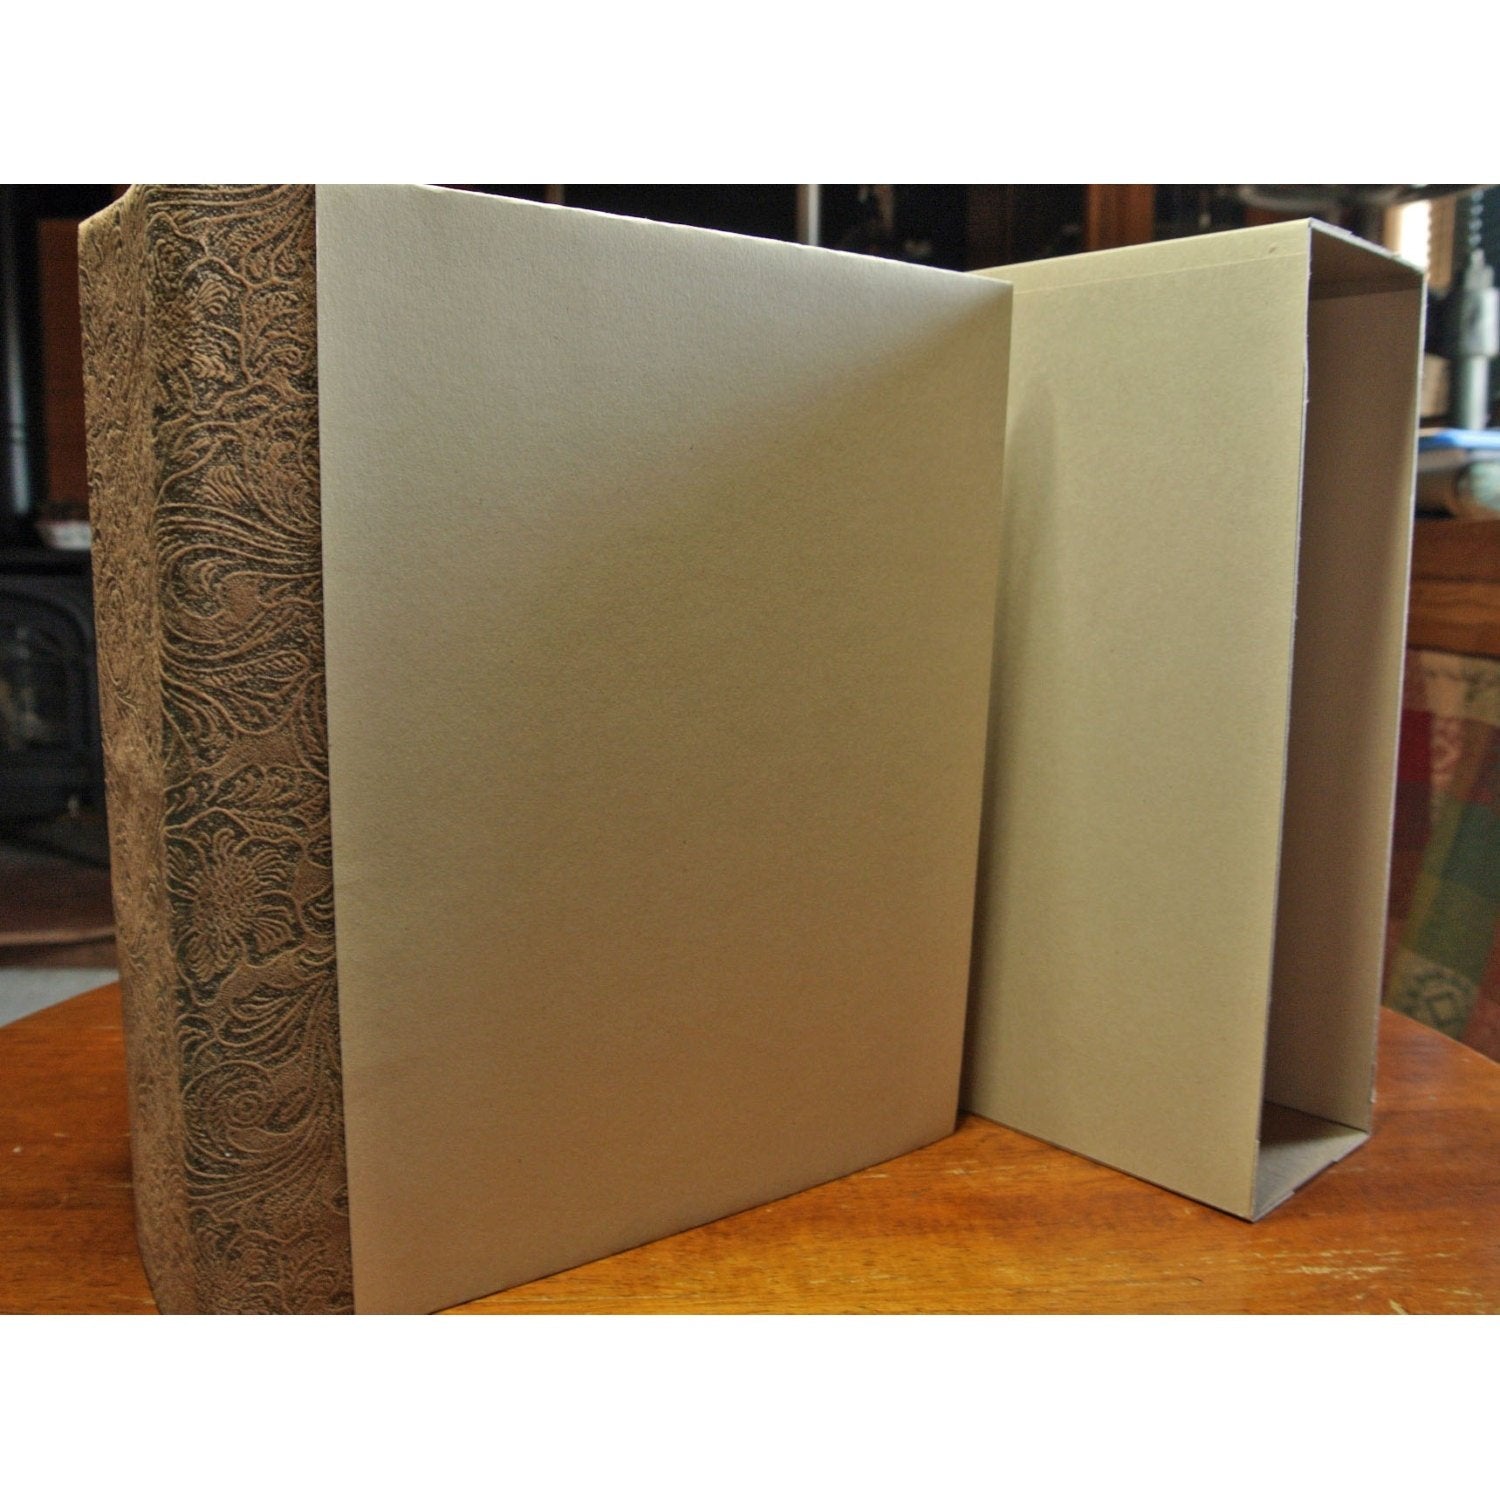 Blank Scrapbook Album, Handmade - Large Album with Storage Case to doc